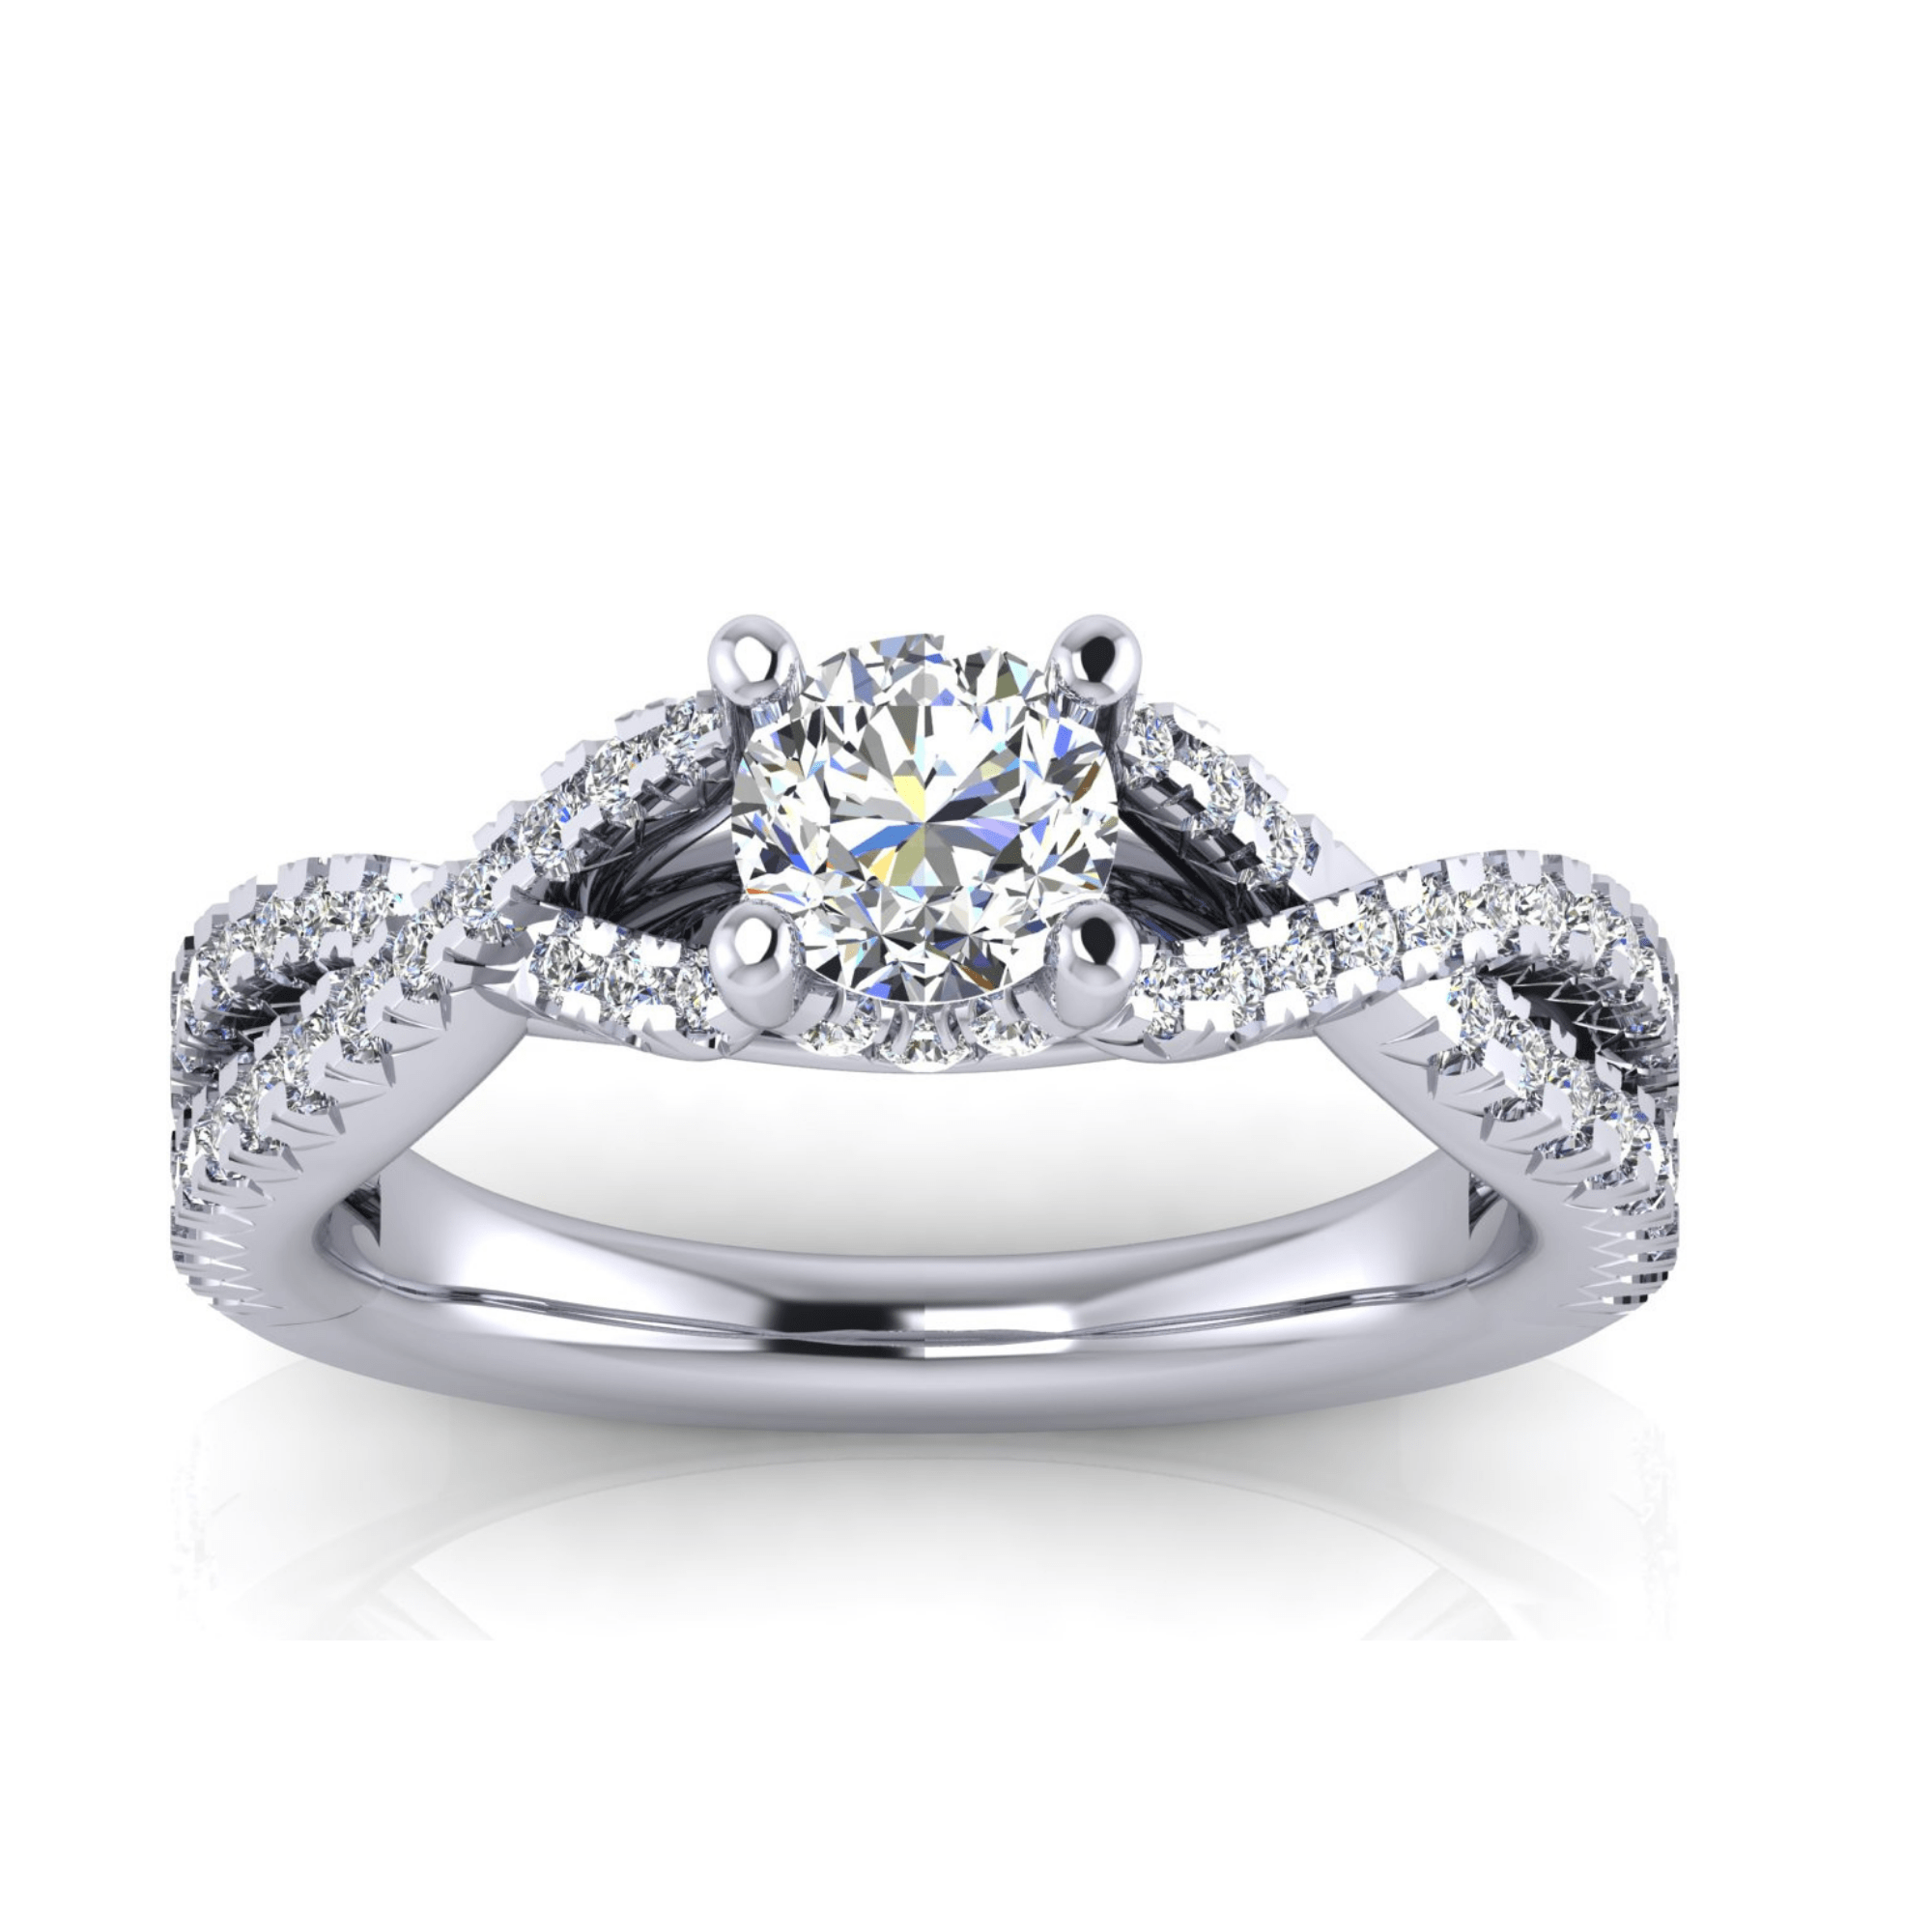 Infinity round brilliant diamond ring